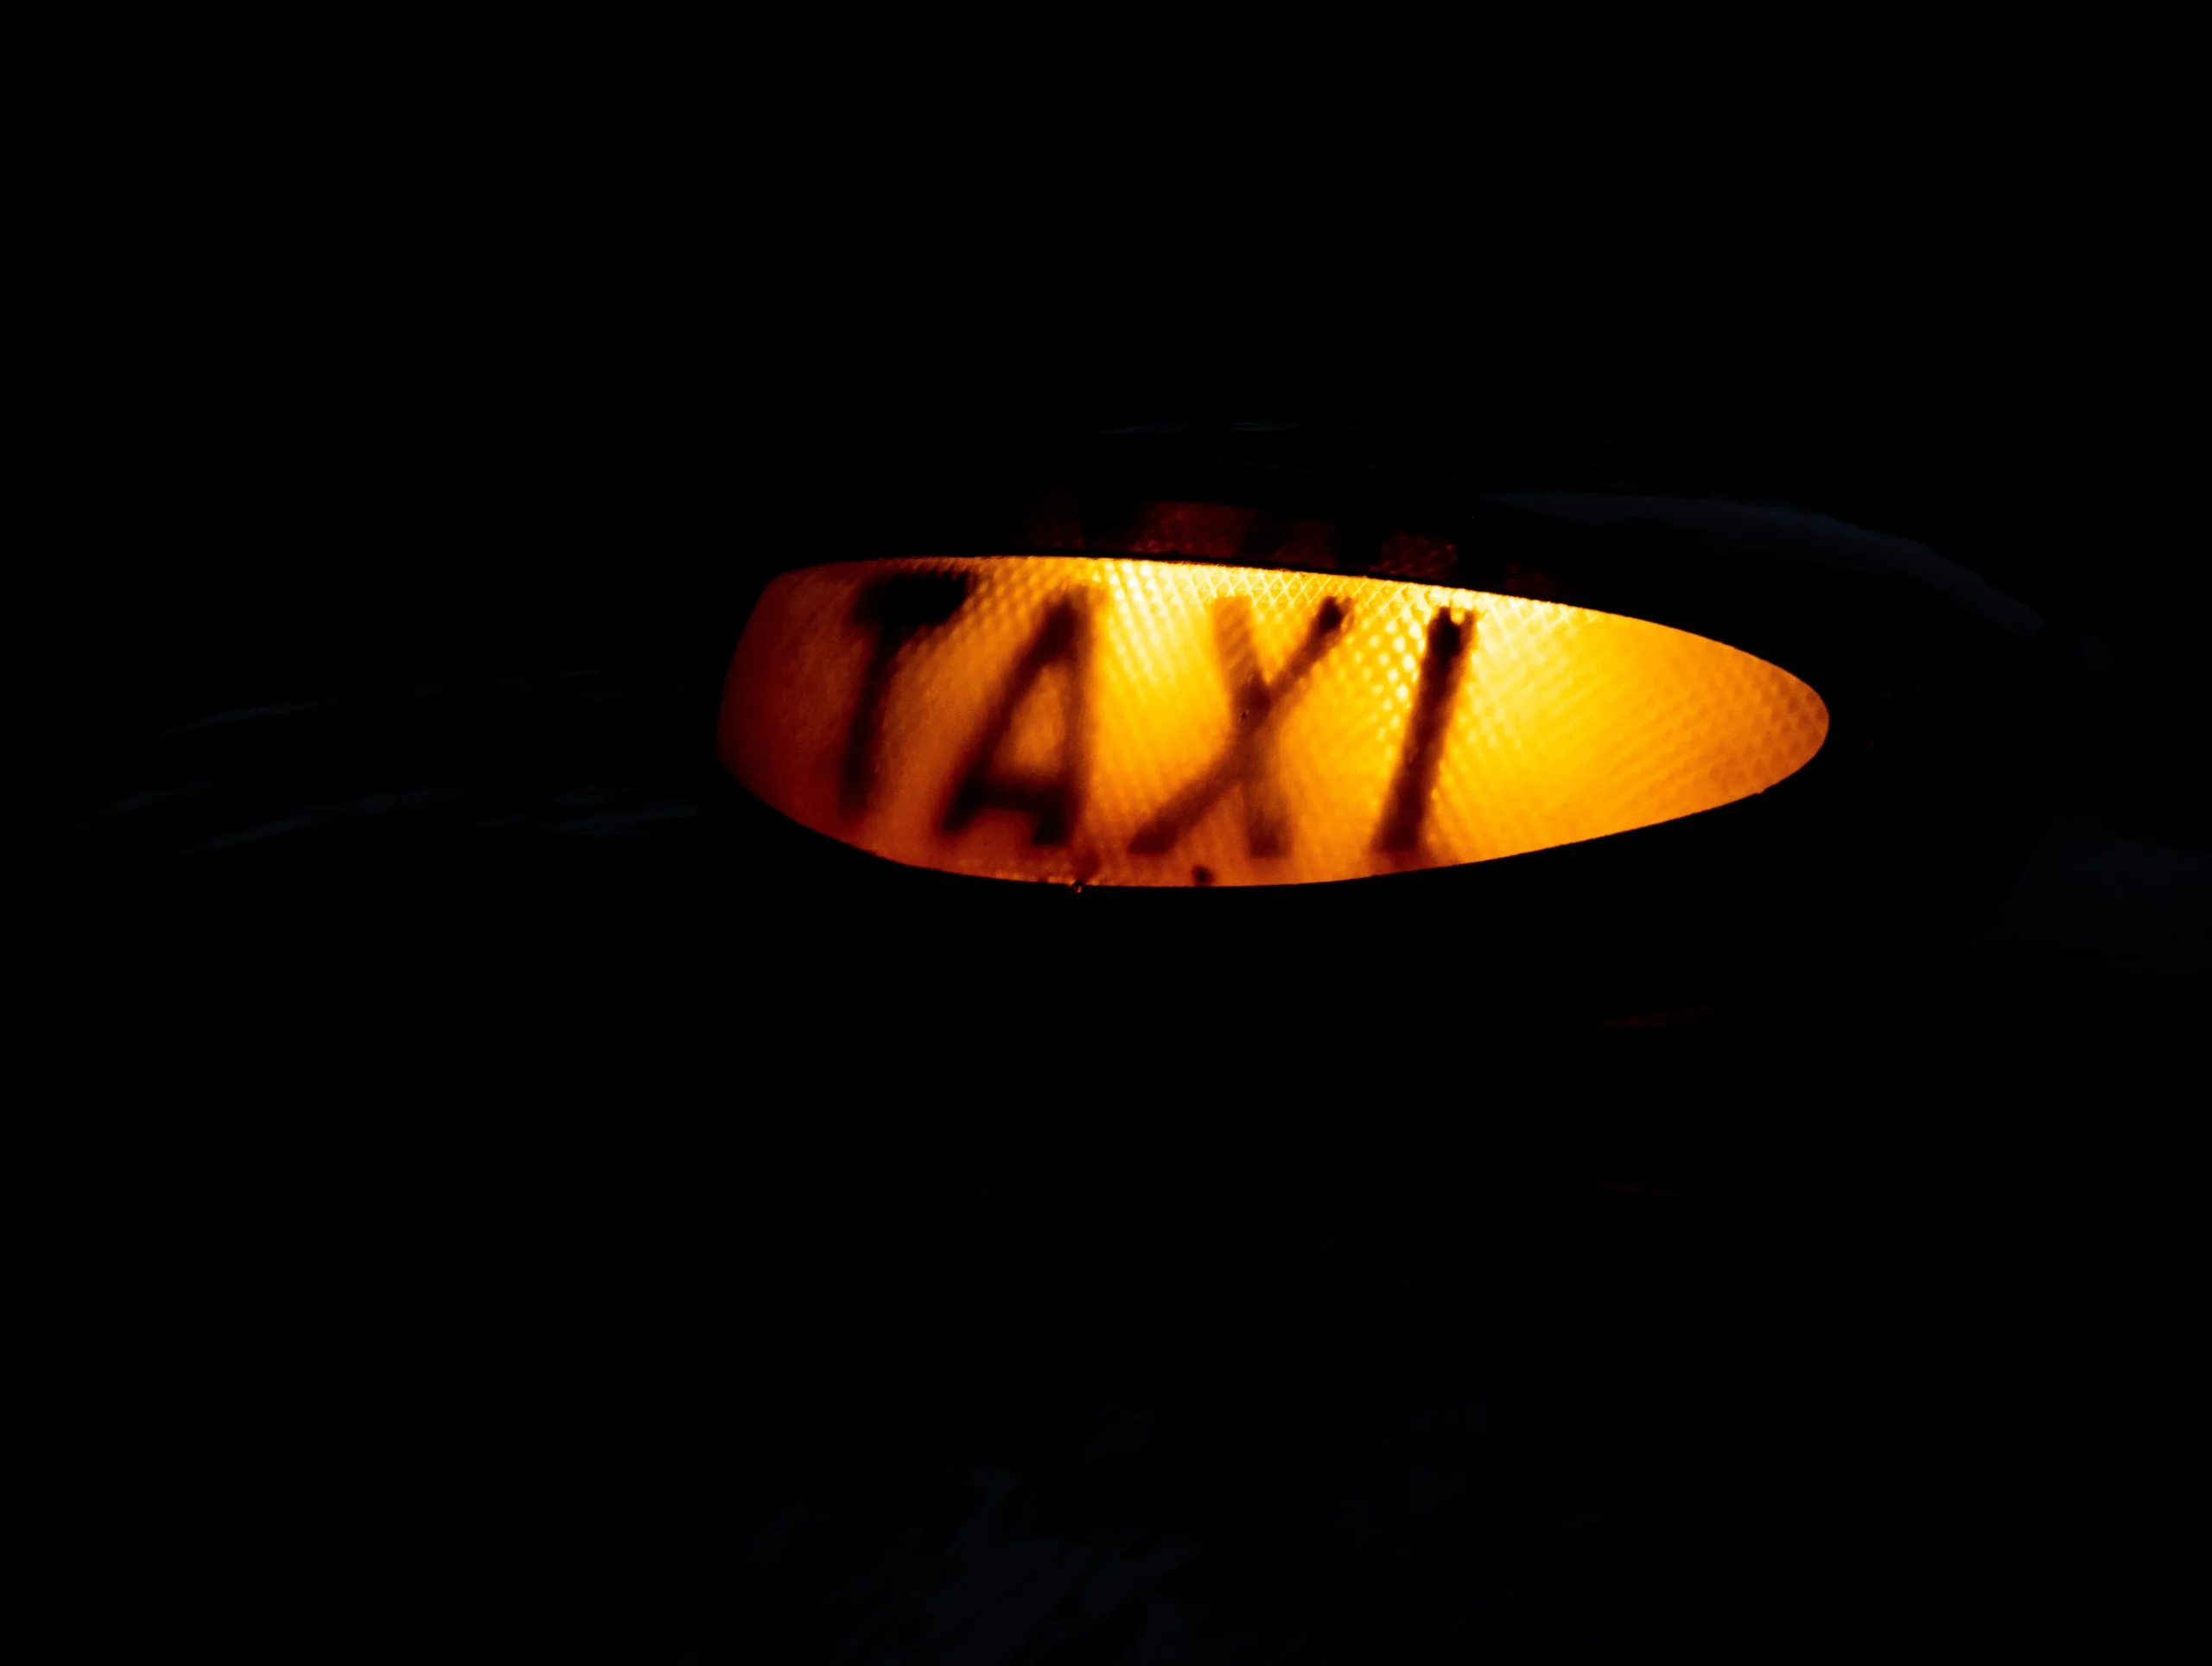 Black Cab Taxi Light